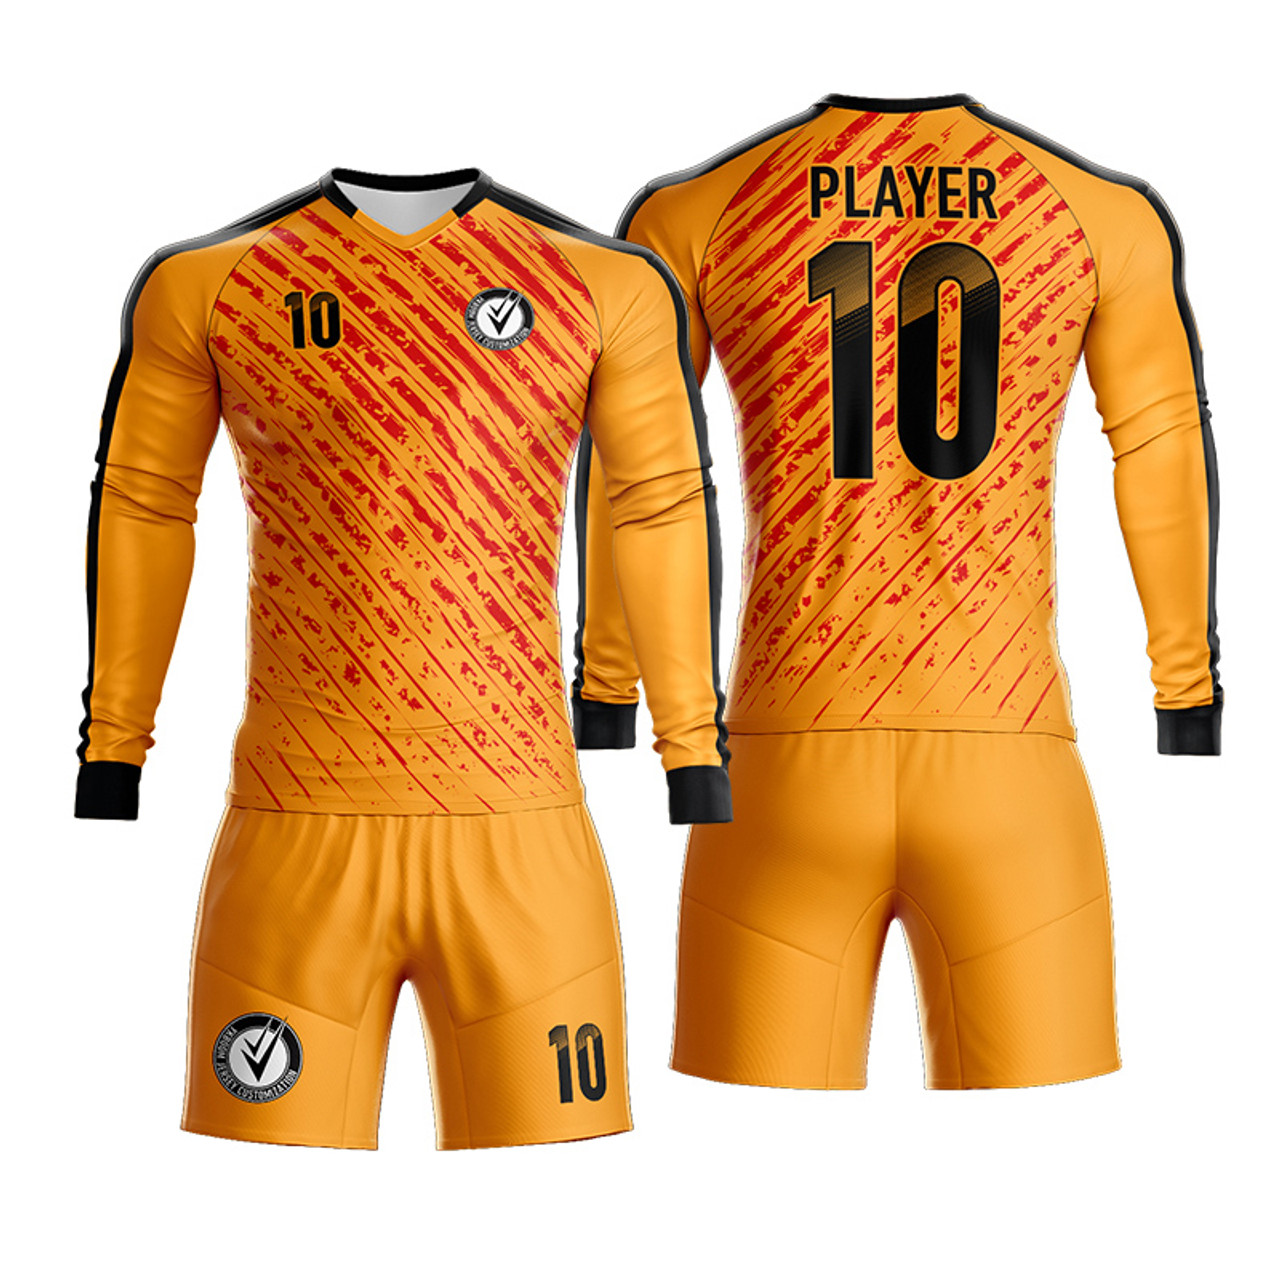 Yellow Thunder Customized Football Team Jersey Design  Customized Football  Jerseys Online India - TheSportStuff